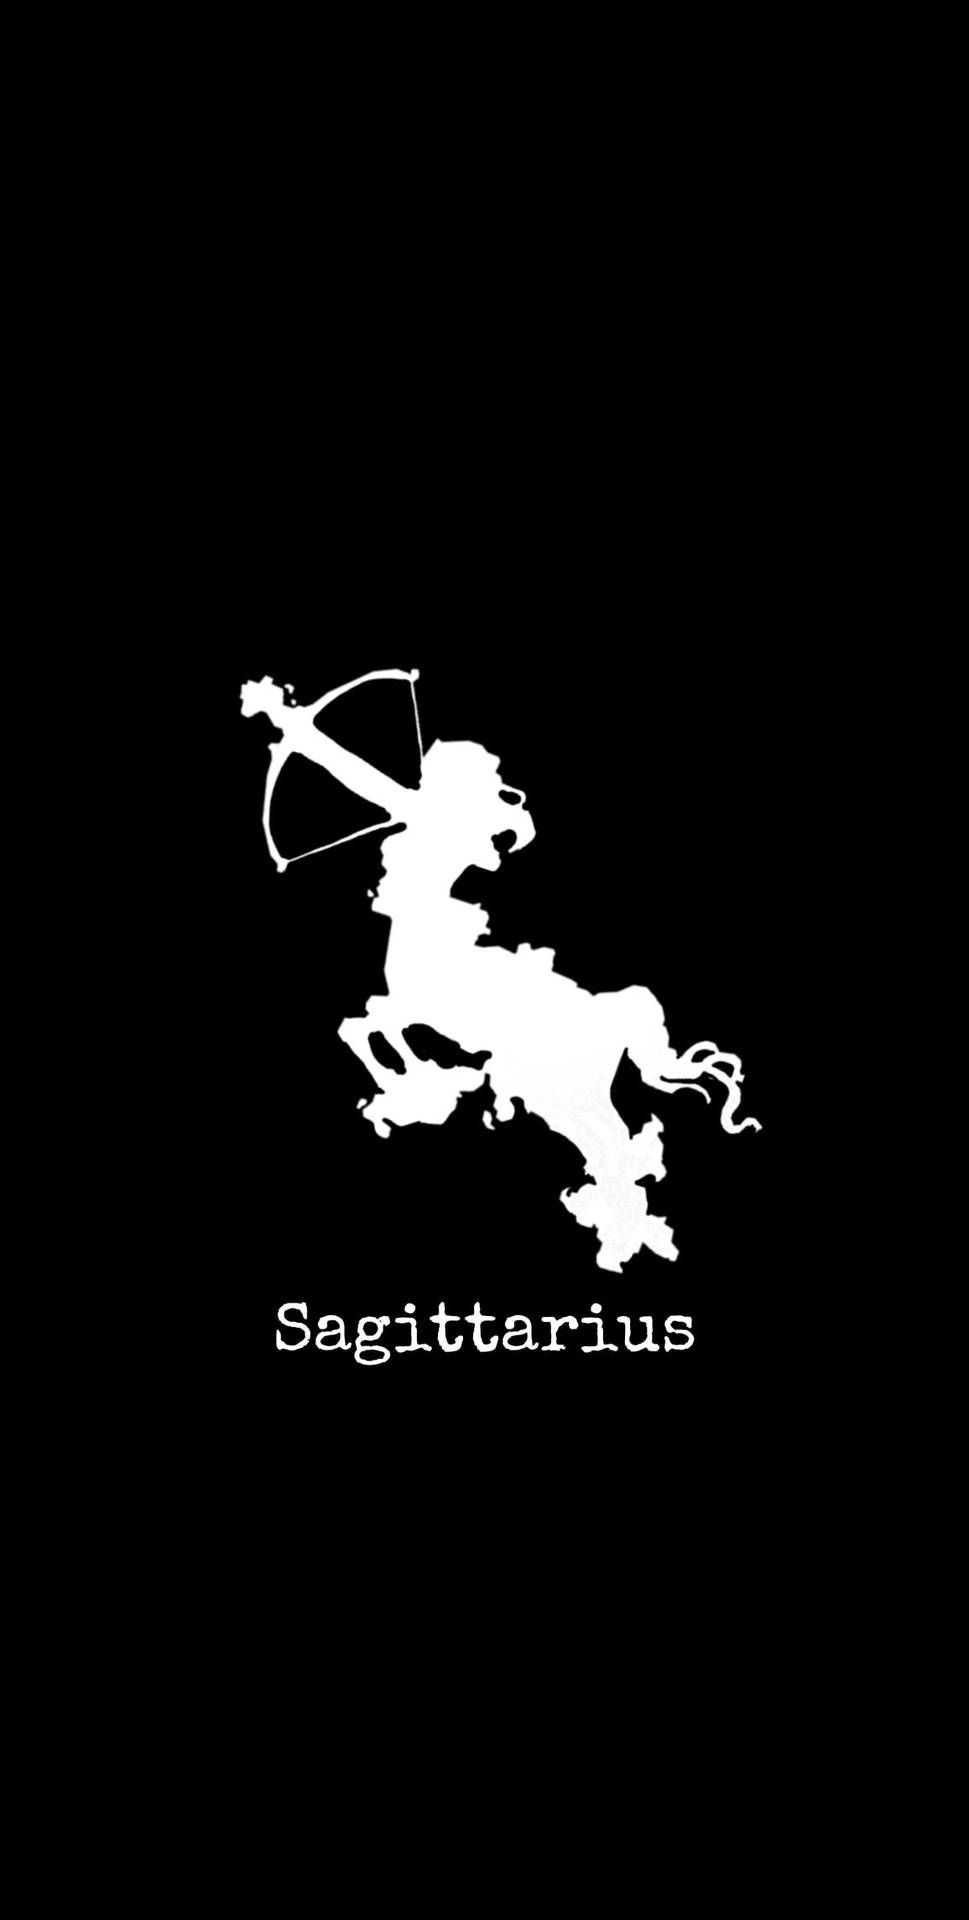 Sagittarius wallpaper for iPhone and Android. - Sagittarius